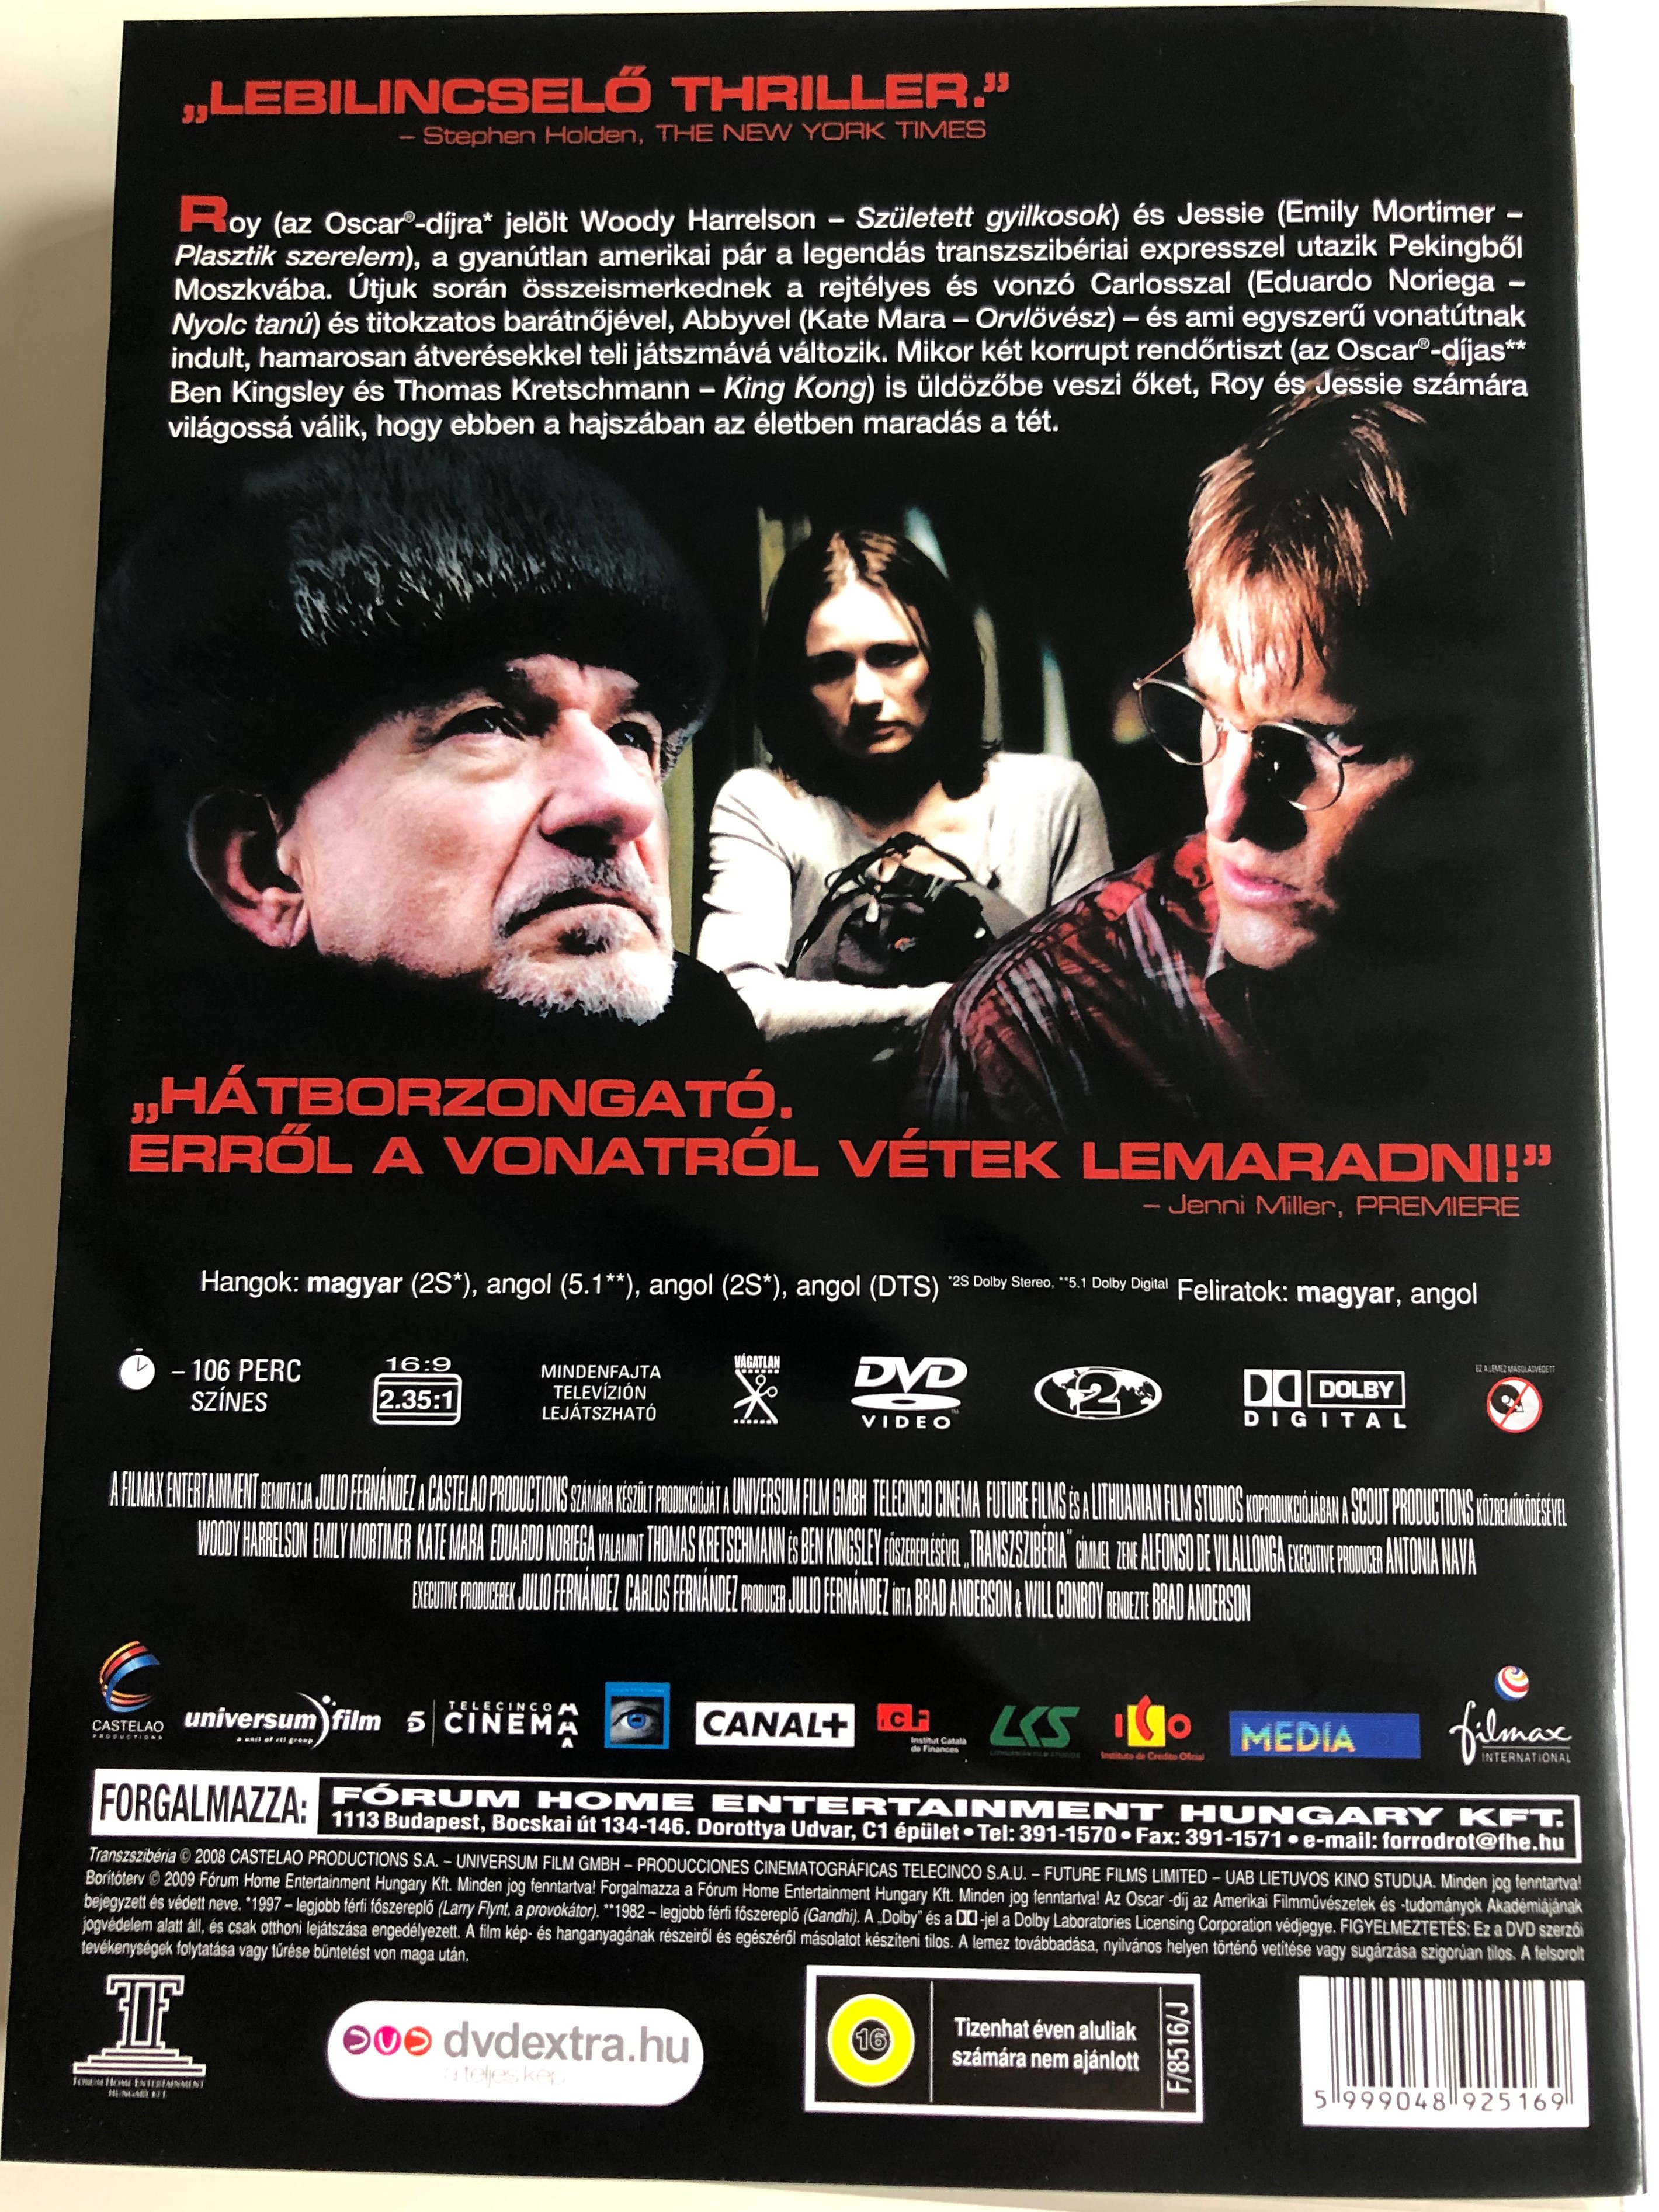 Transsiberian DVD 2008 Transz szibéria 1.JPG